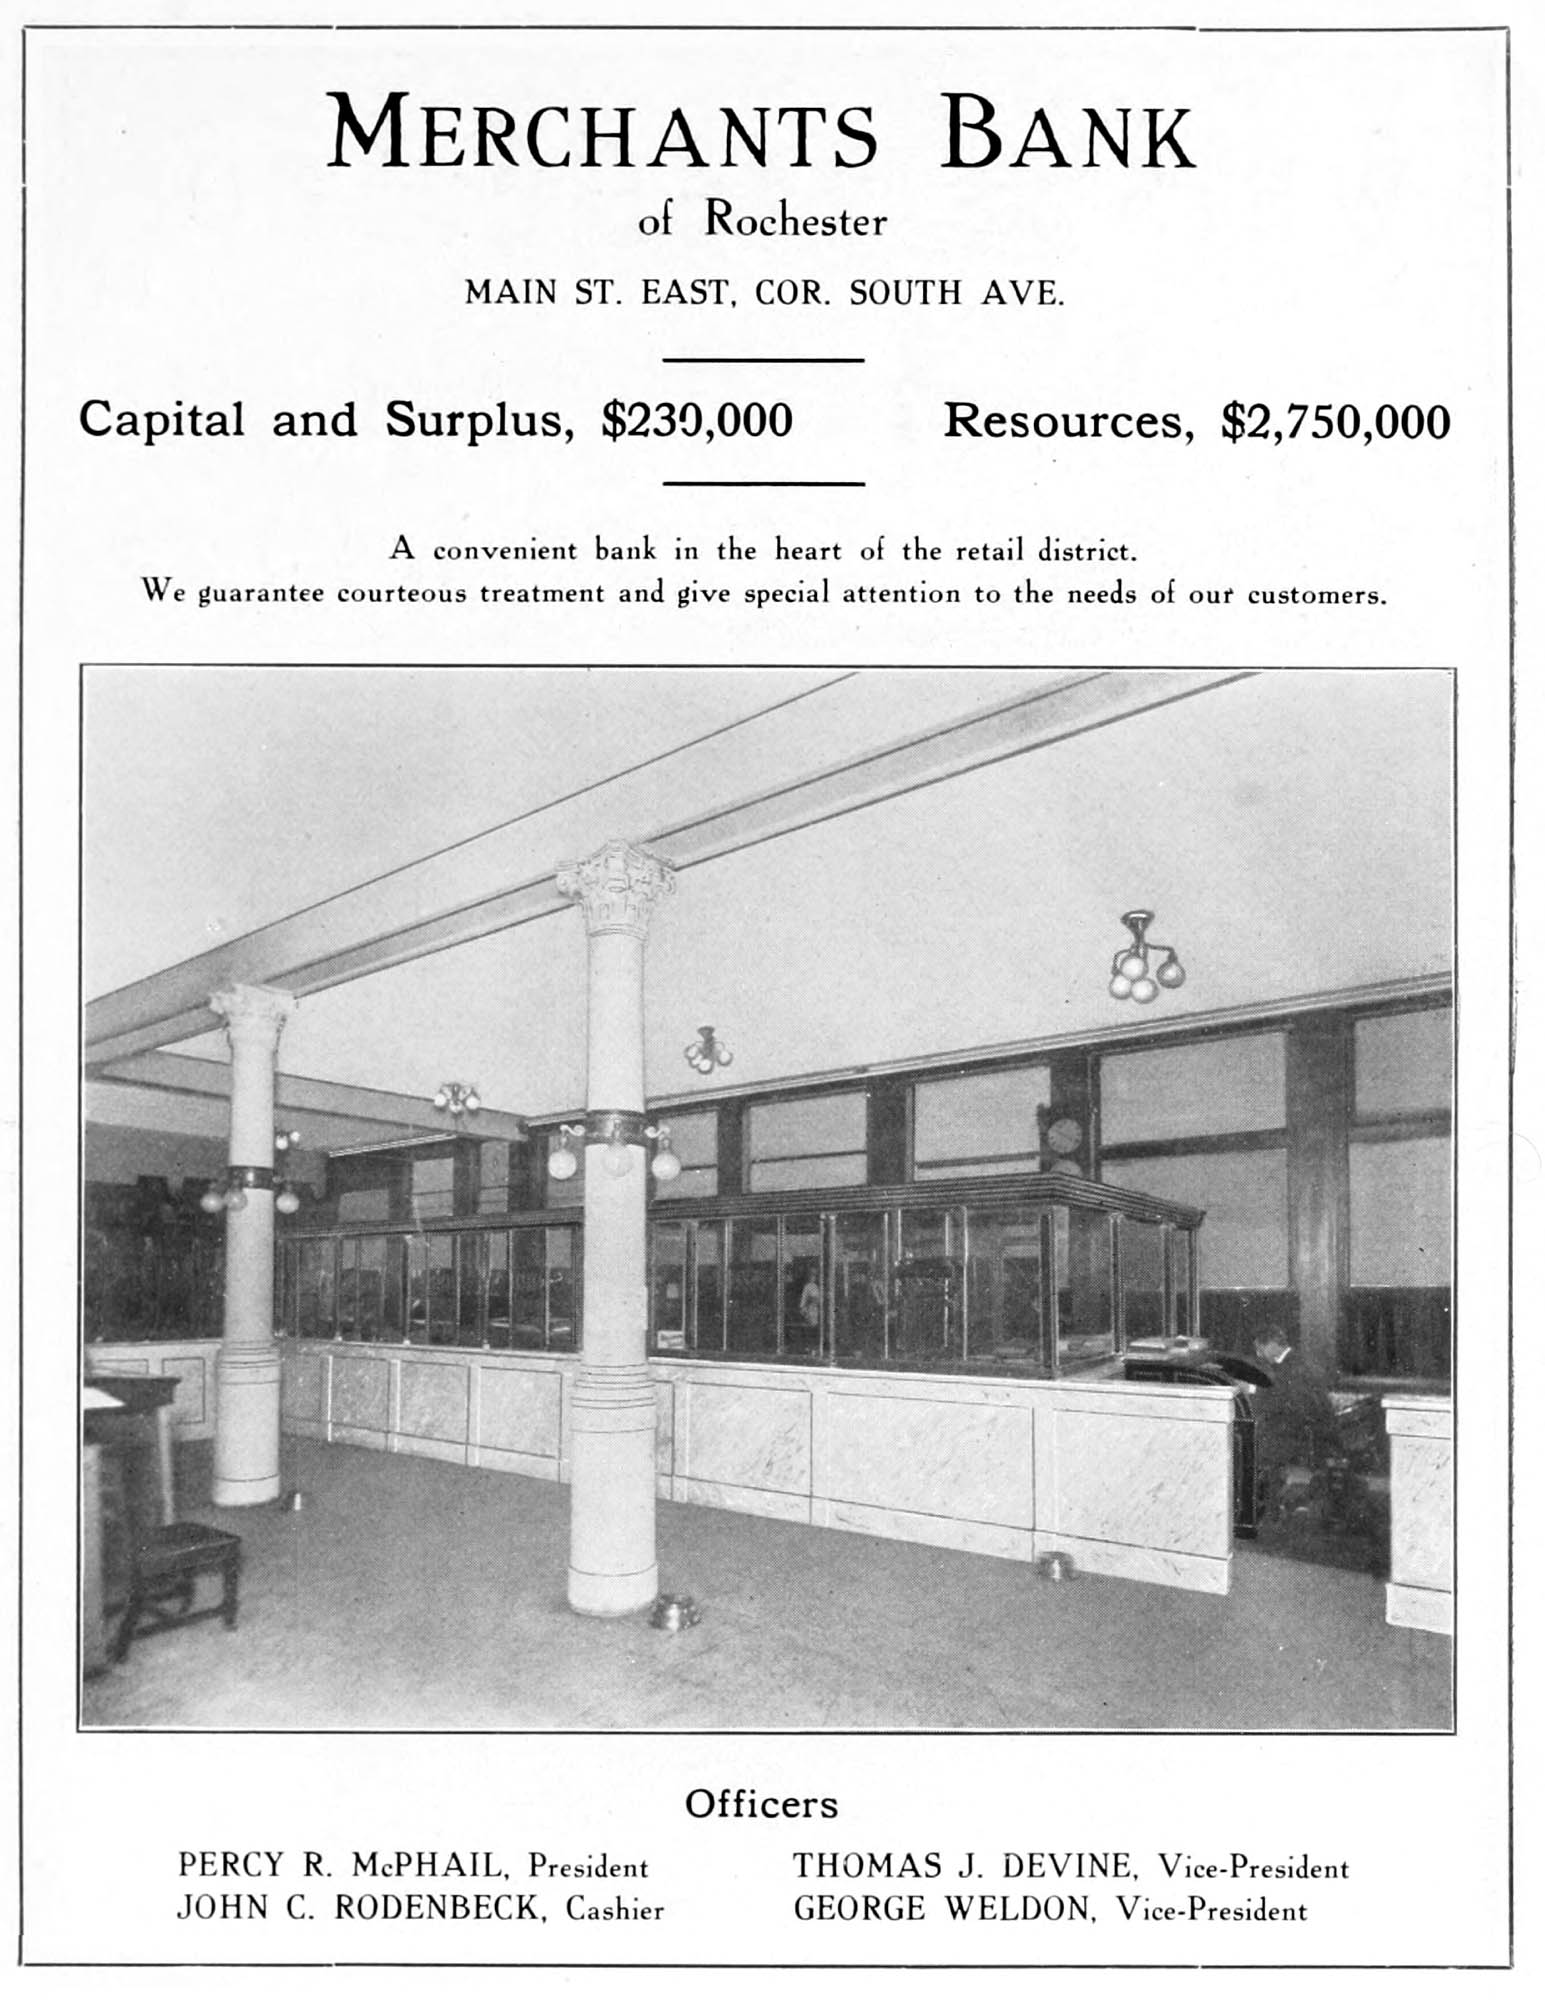 Merchants Bank - interior - 1906